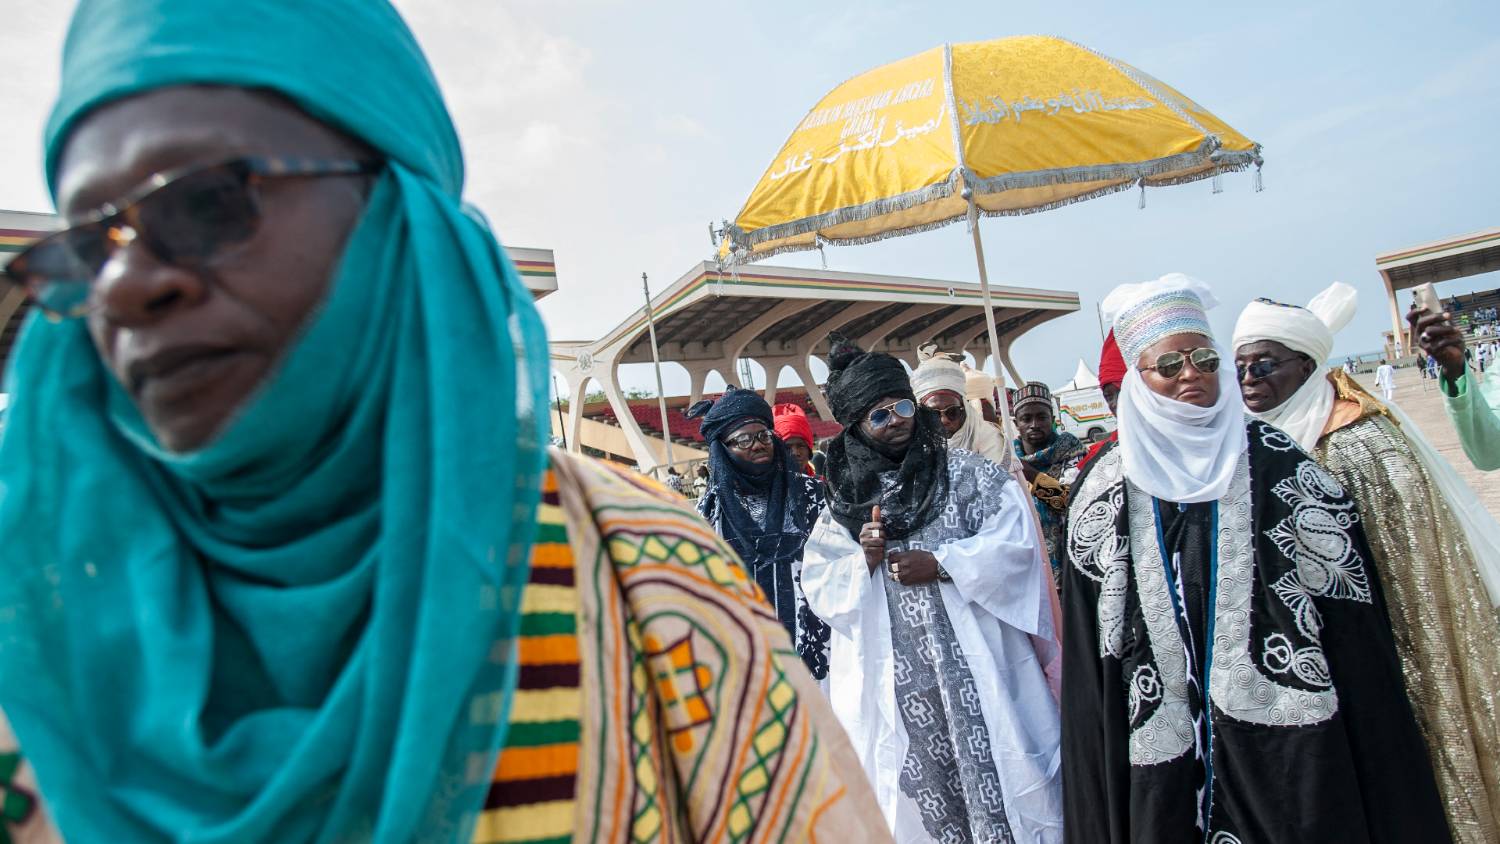 Tribal leaders gather to mark Eid prayers in Accra, Ghana [Cristina Aldehuela/AFP]